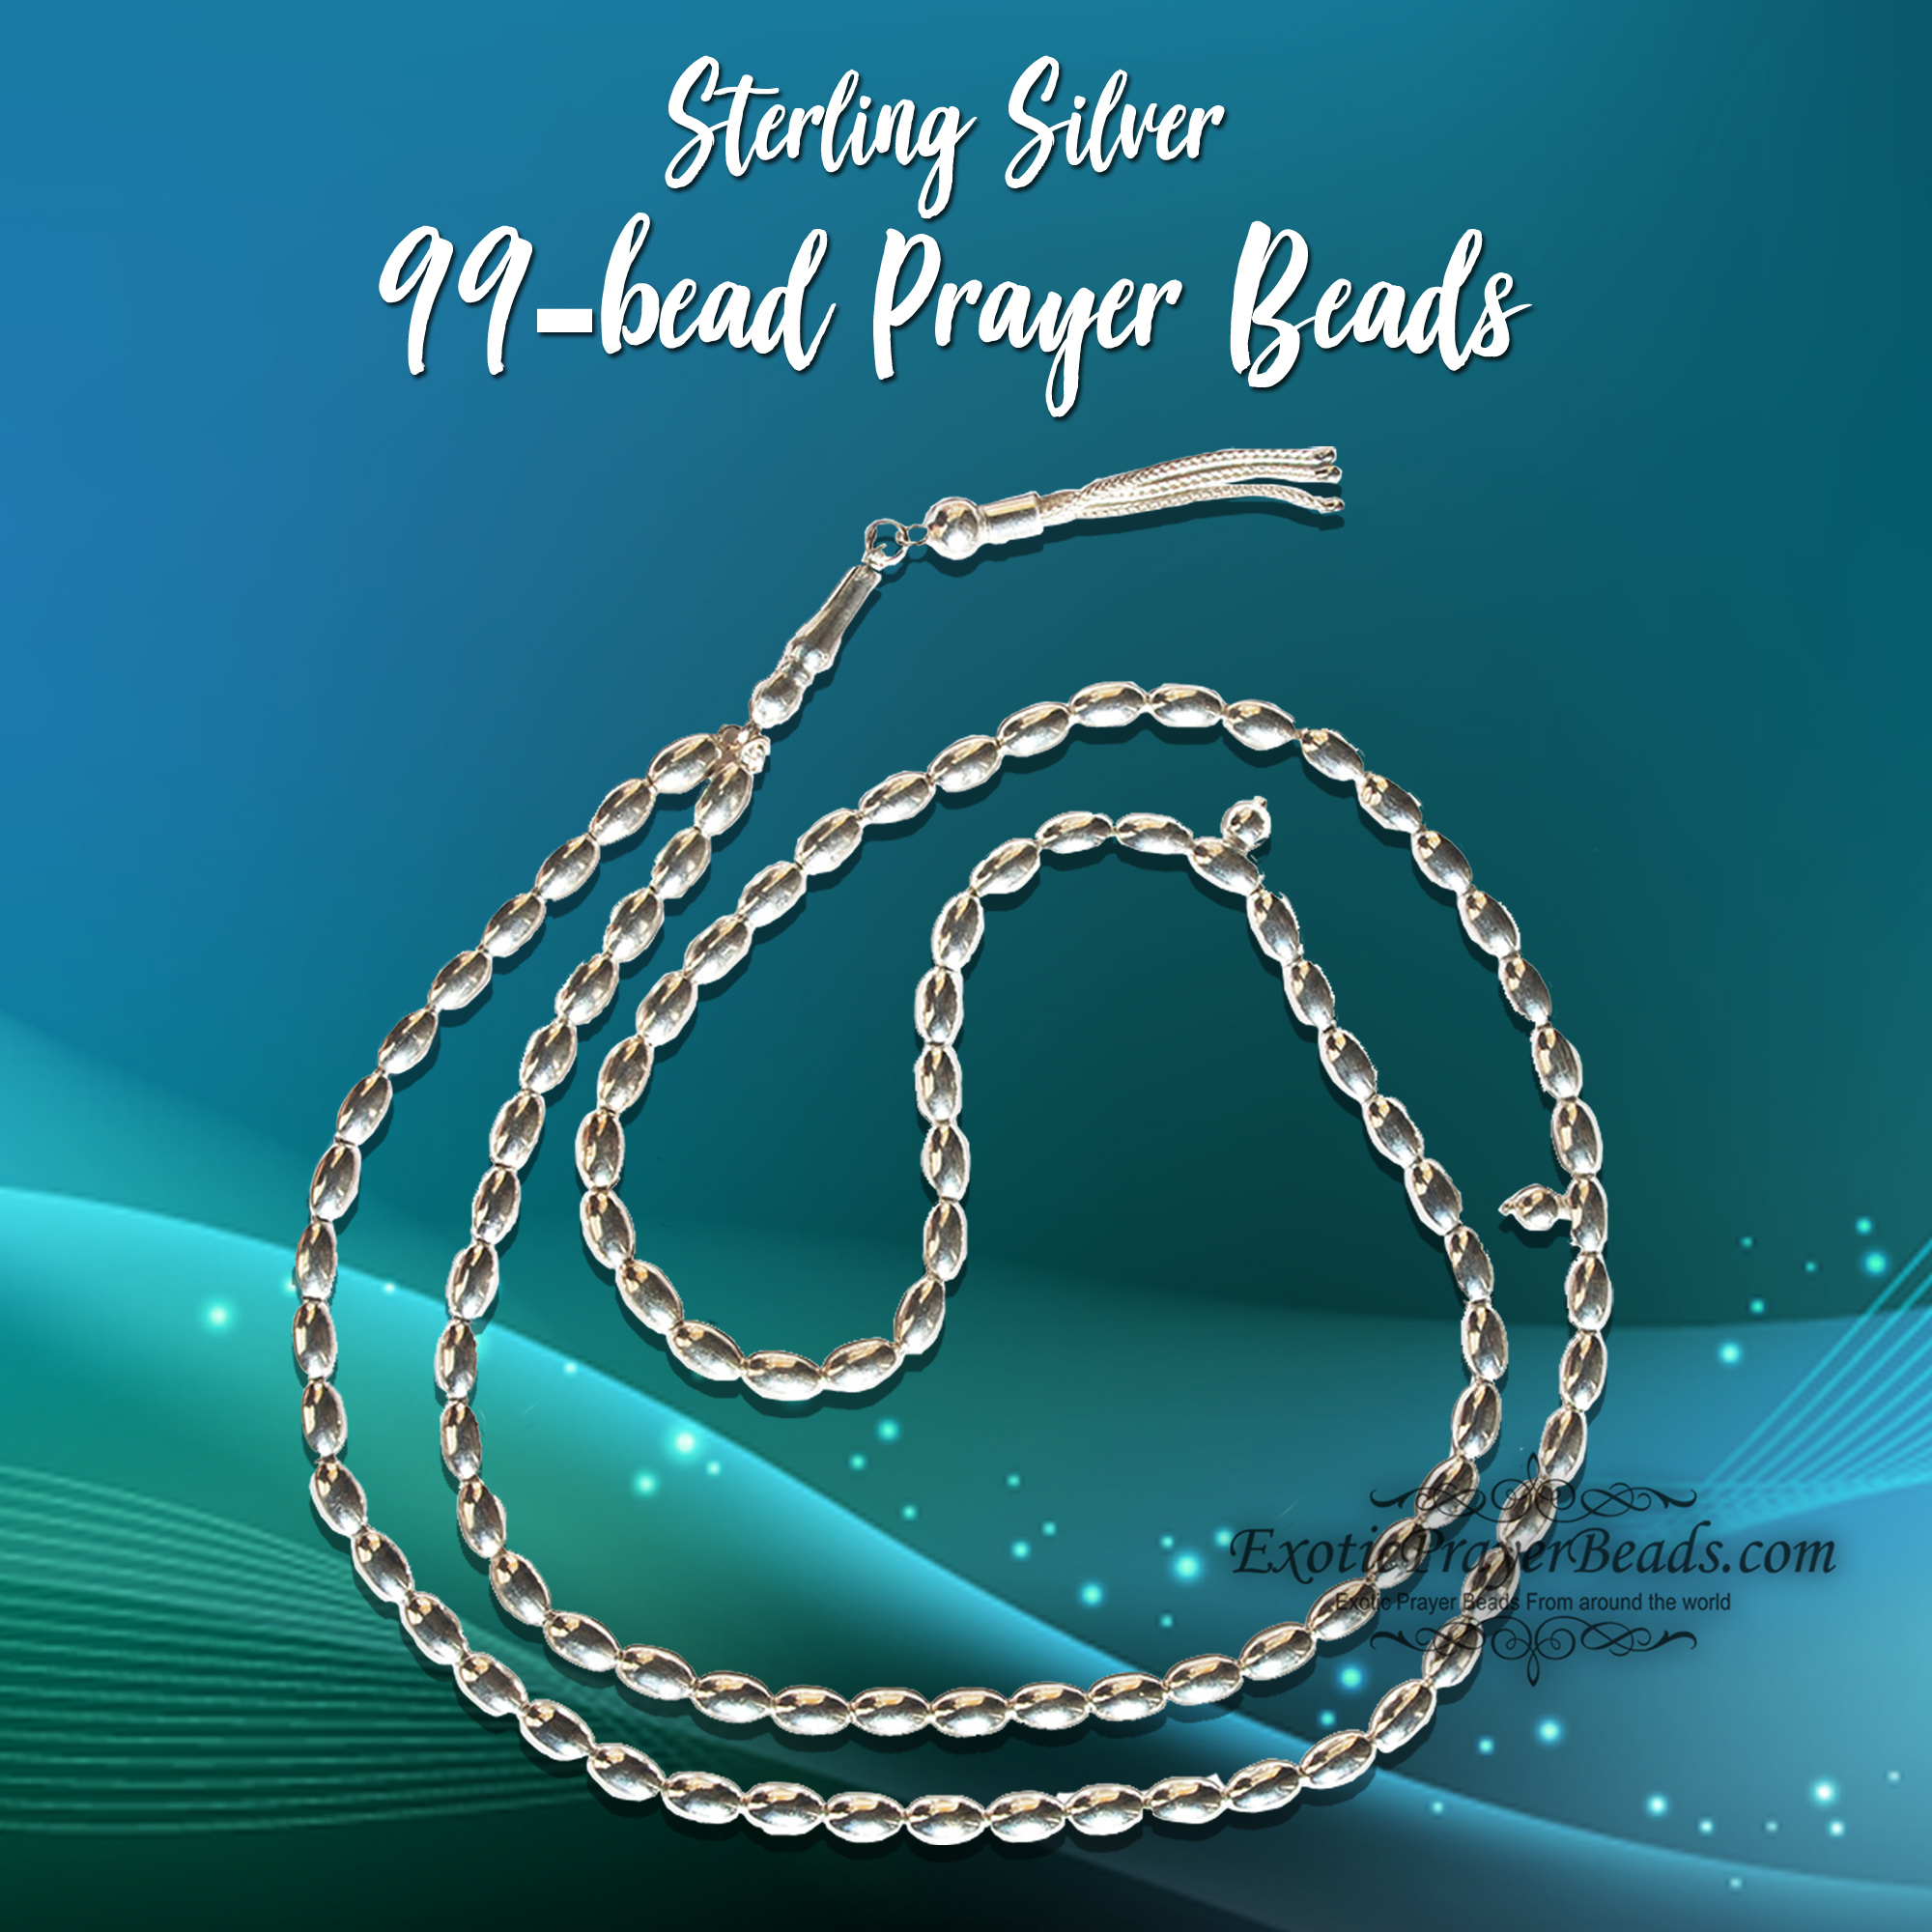 99-bead Prayer Beads